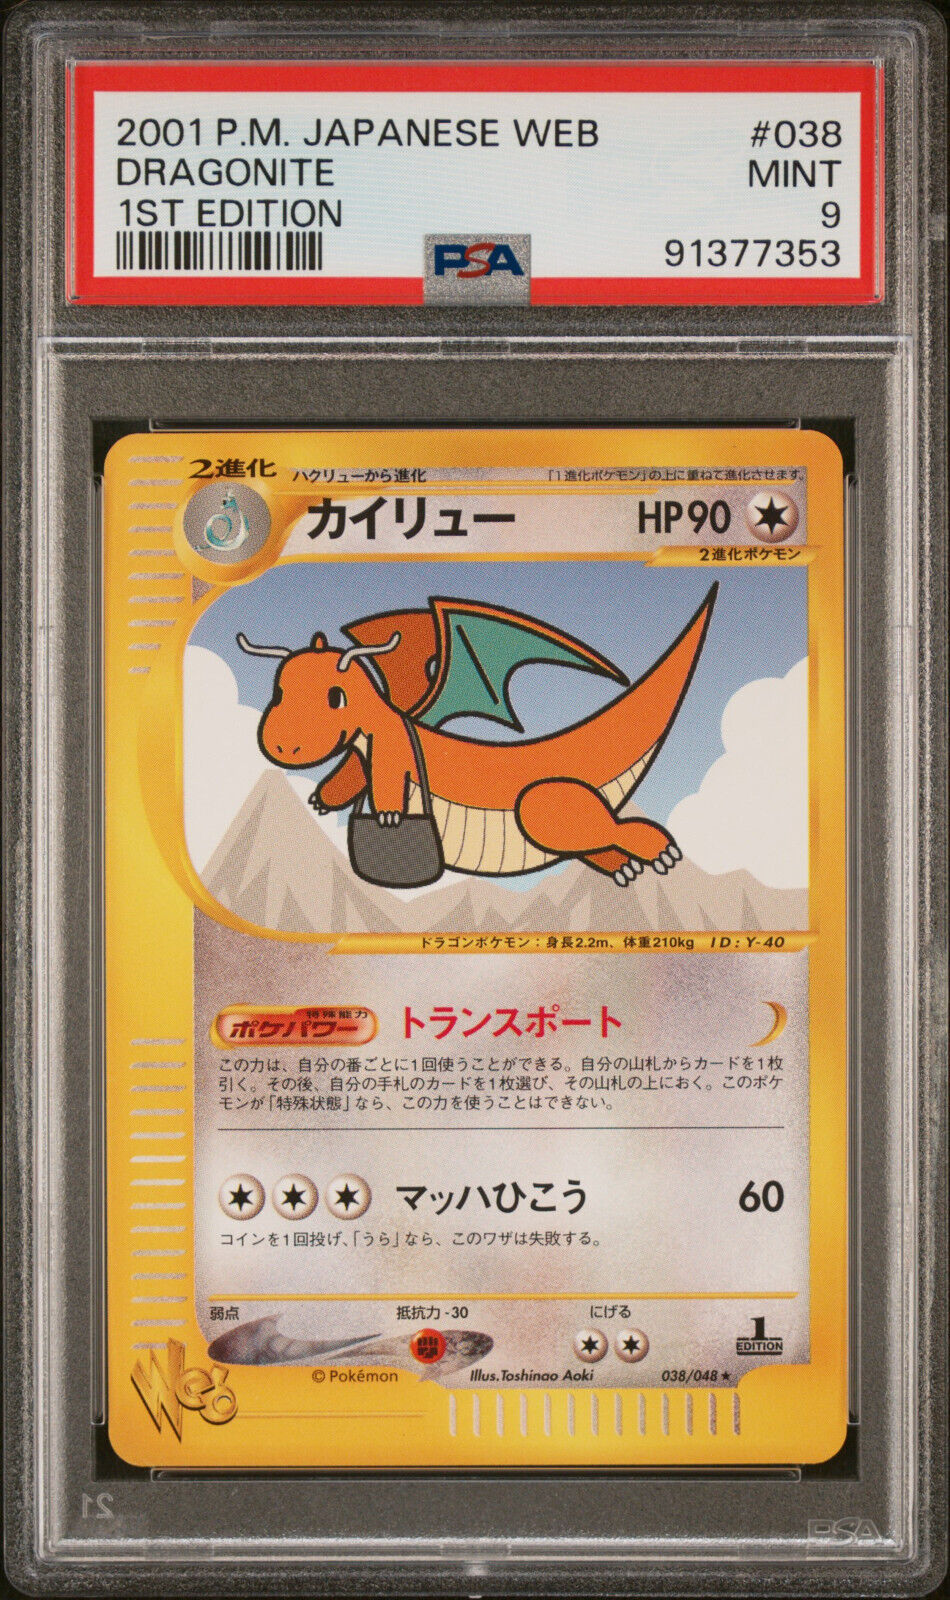 PSA 9 Dragonite 1ST Edition 2001 Japanese Web Pokemon Card #038